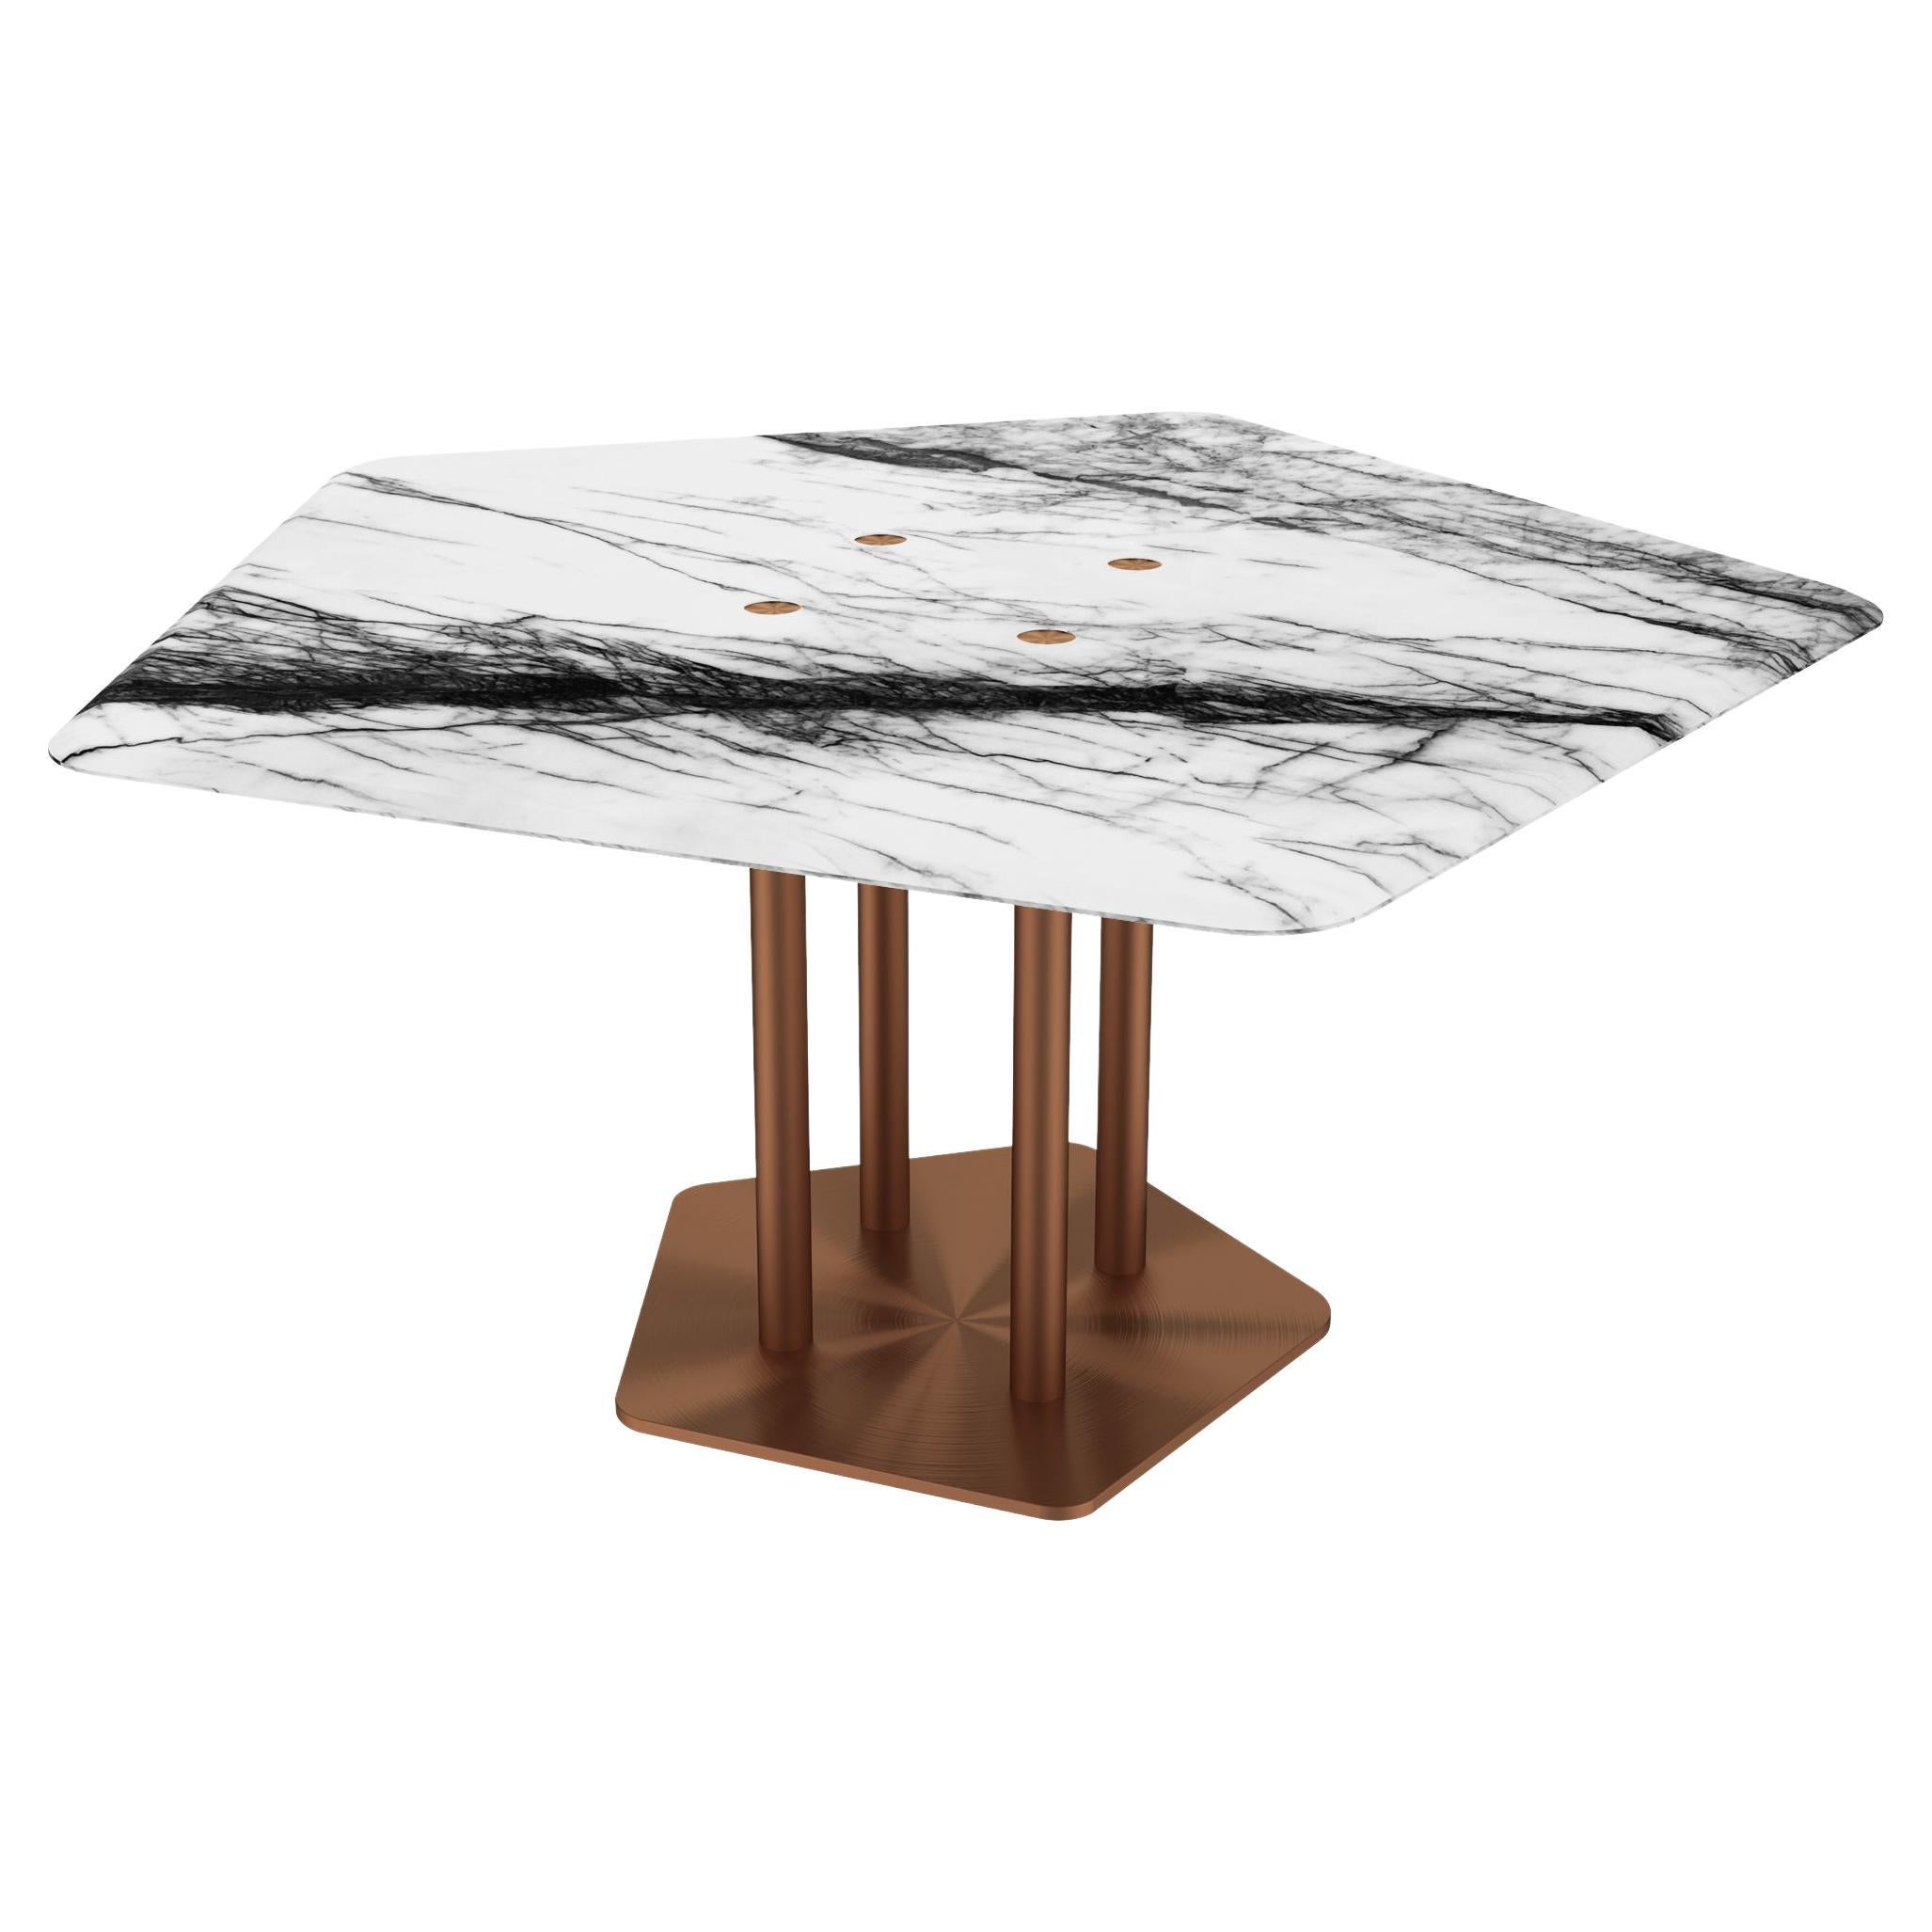 Scandinavian Modern NORDST ELI Dining Table, Italian Grey Rain Marble, Danish Modern Design, New For Sale